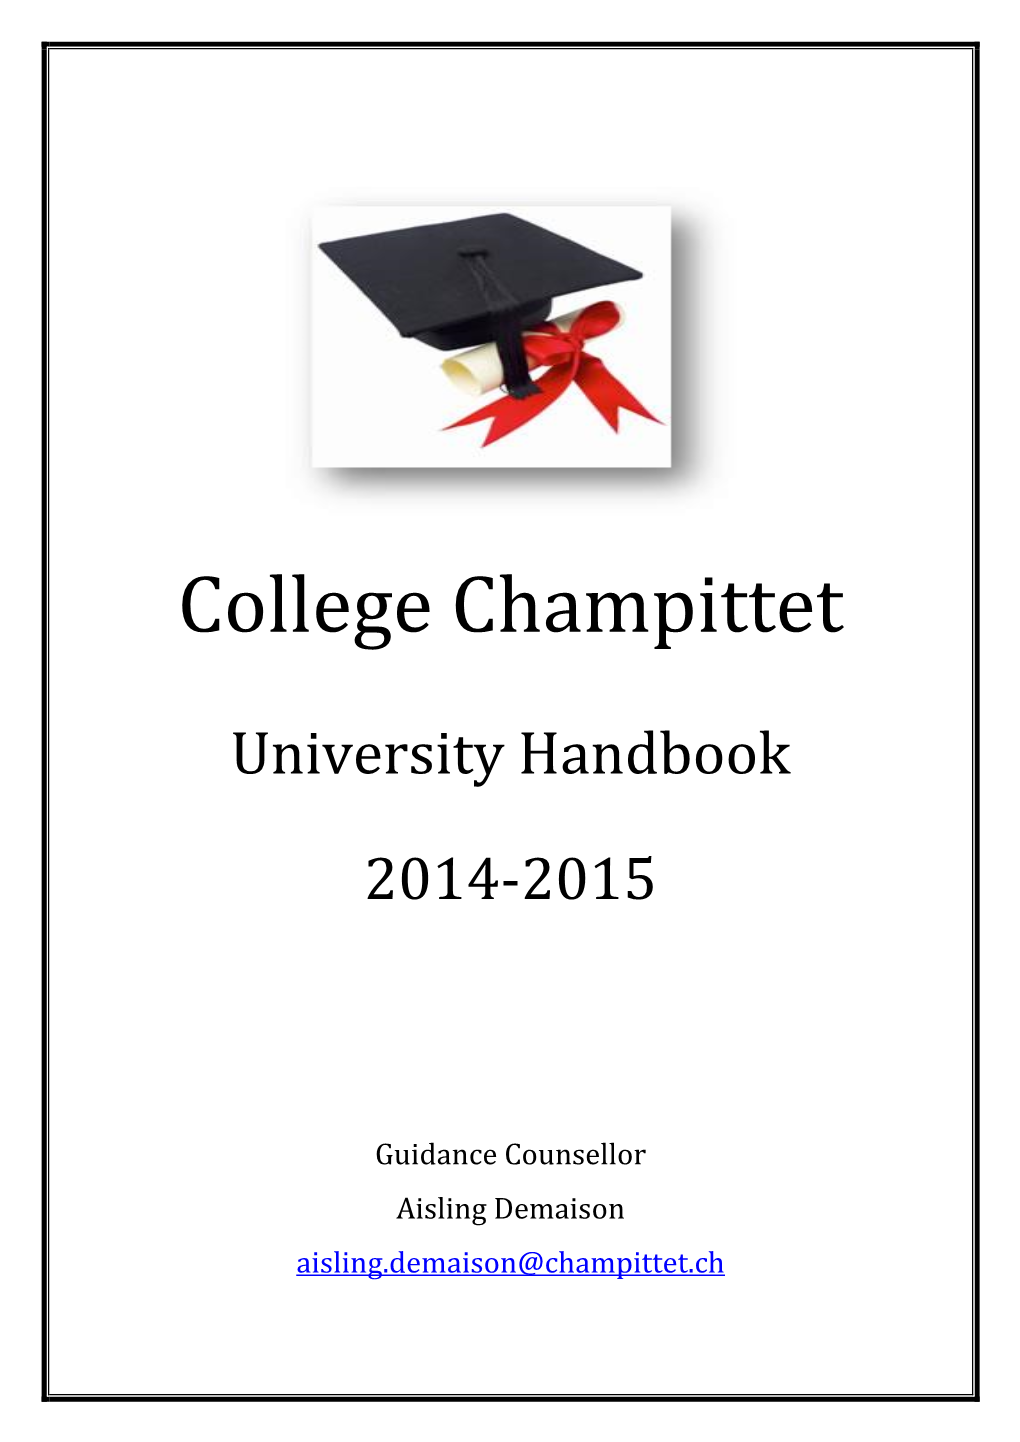 College Champittet University Handbook 2014-2015